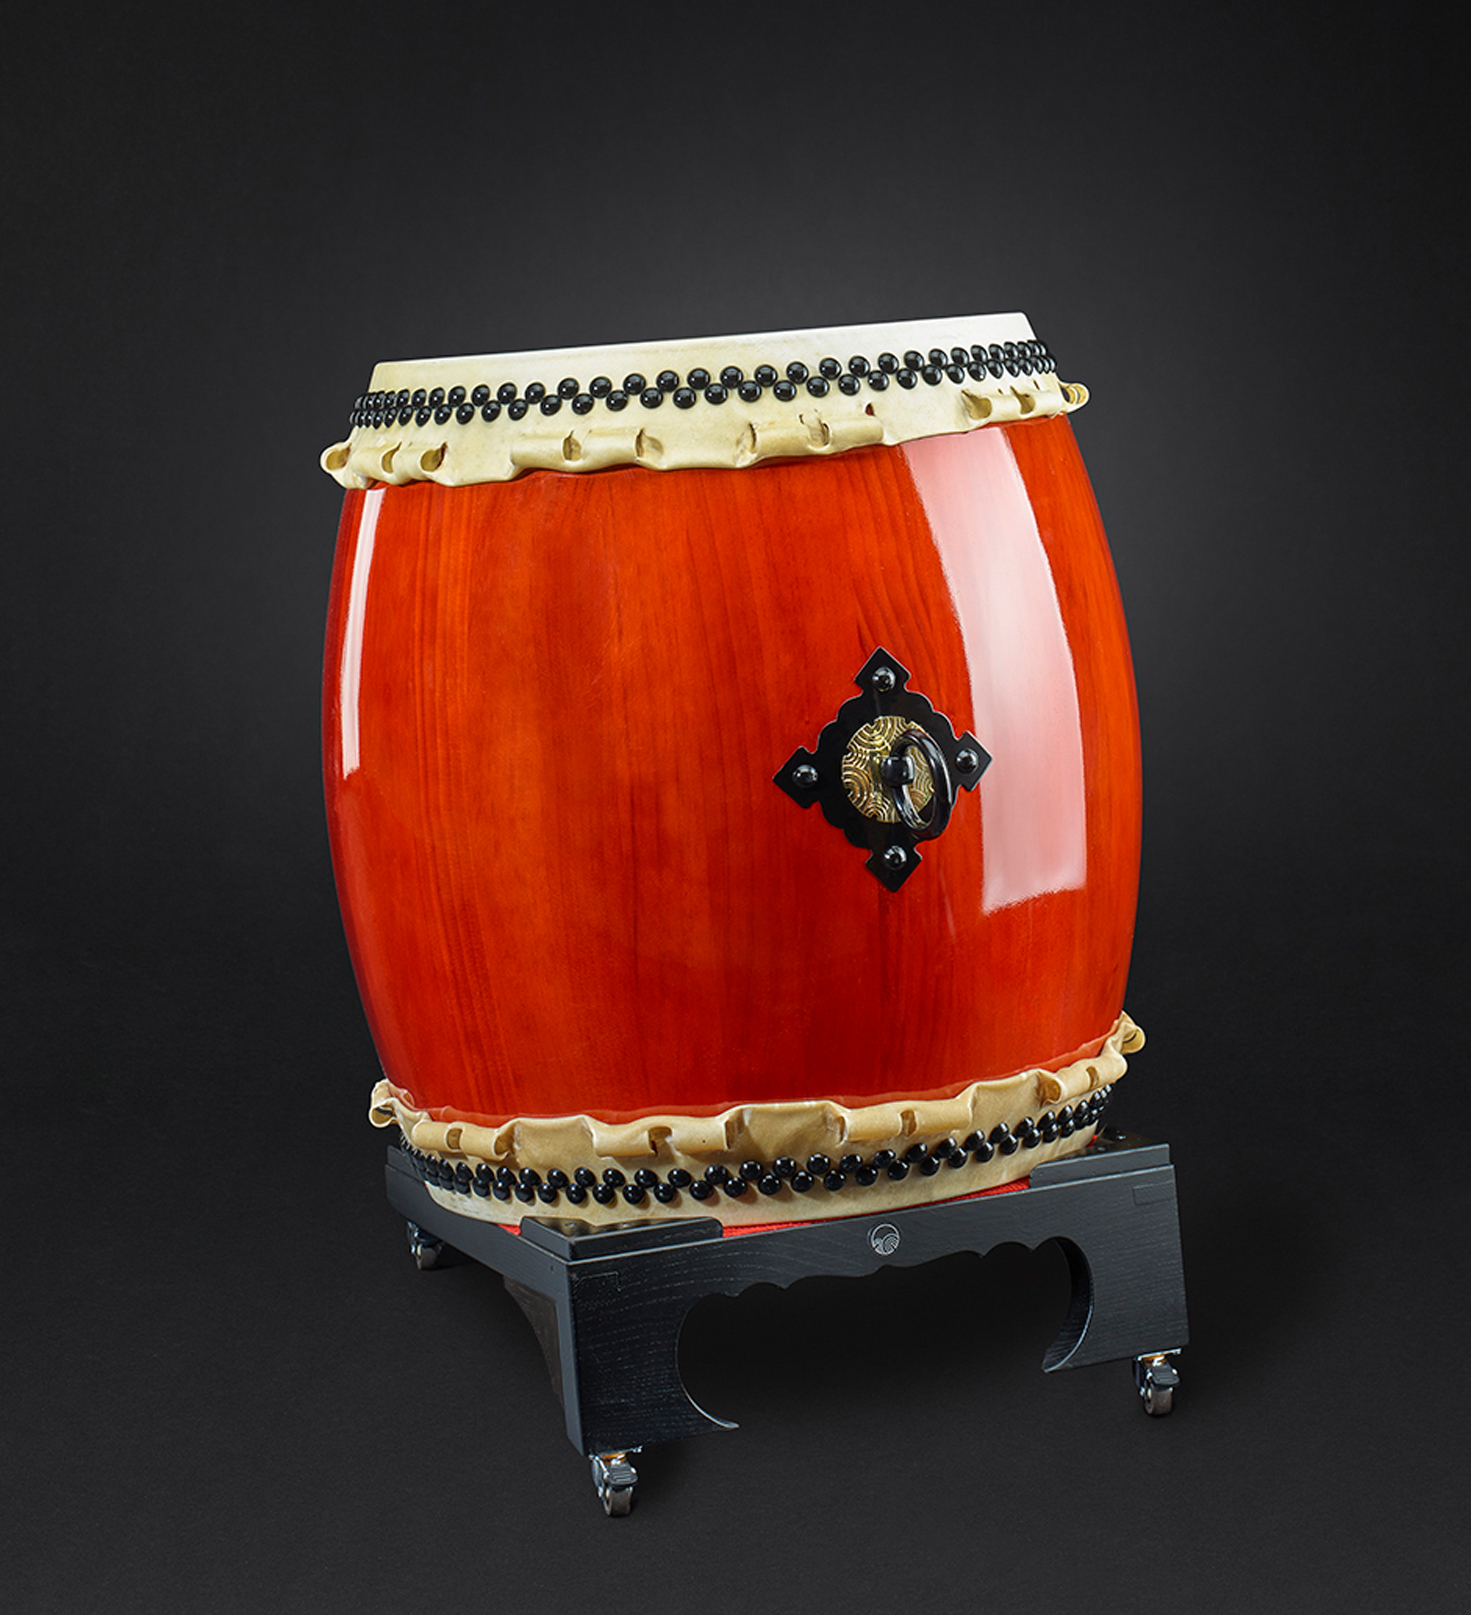 Miya-Daiko hq drum Ø48cm (995€) with traditional-stand (160€)